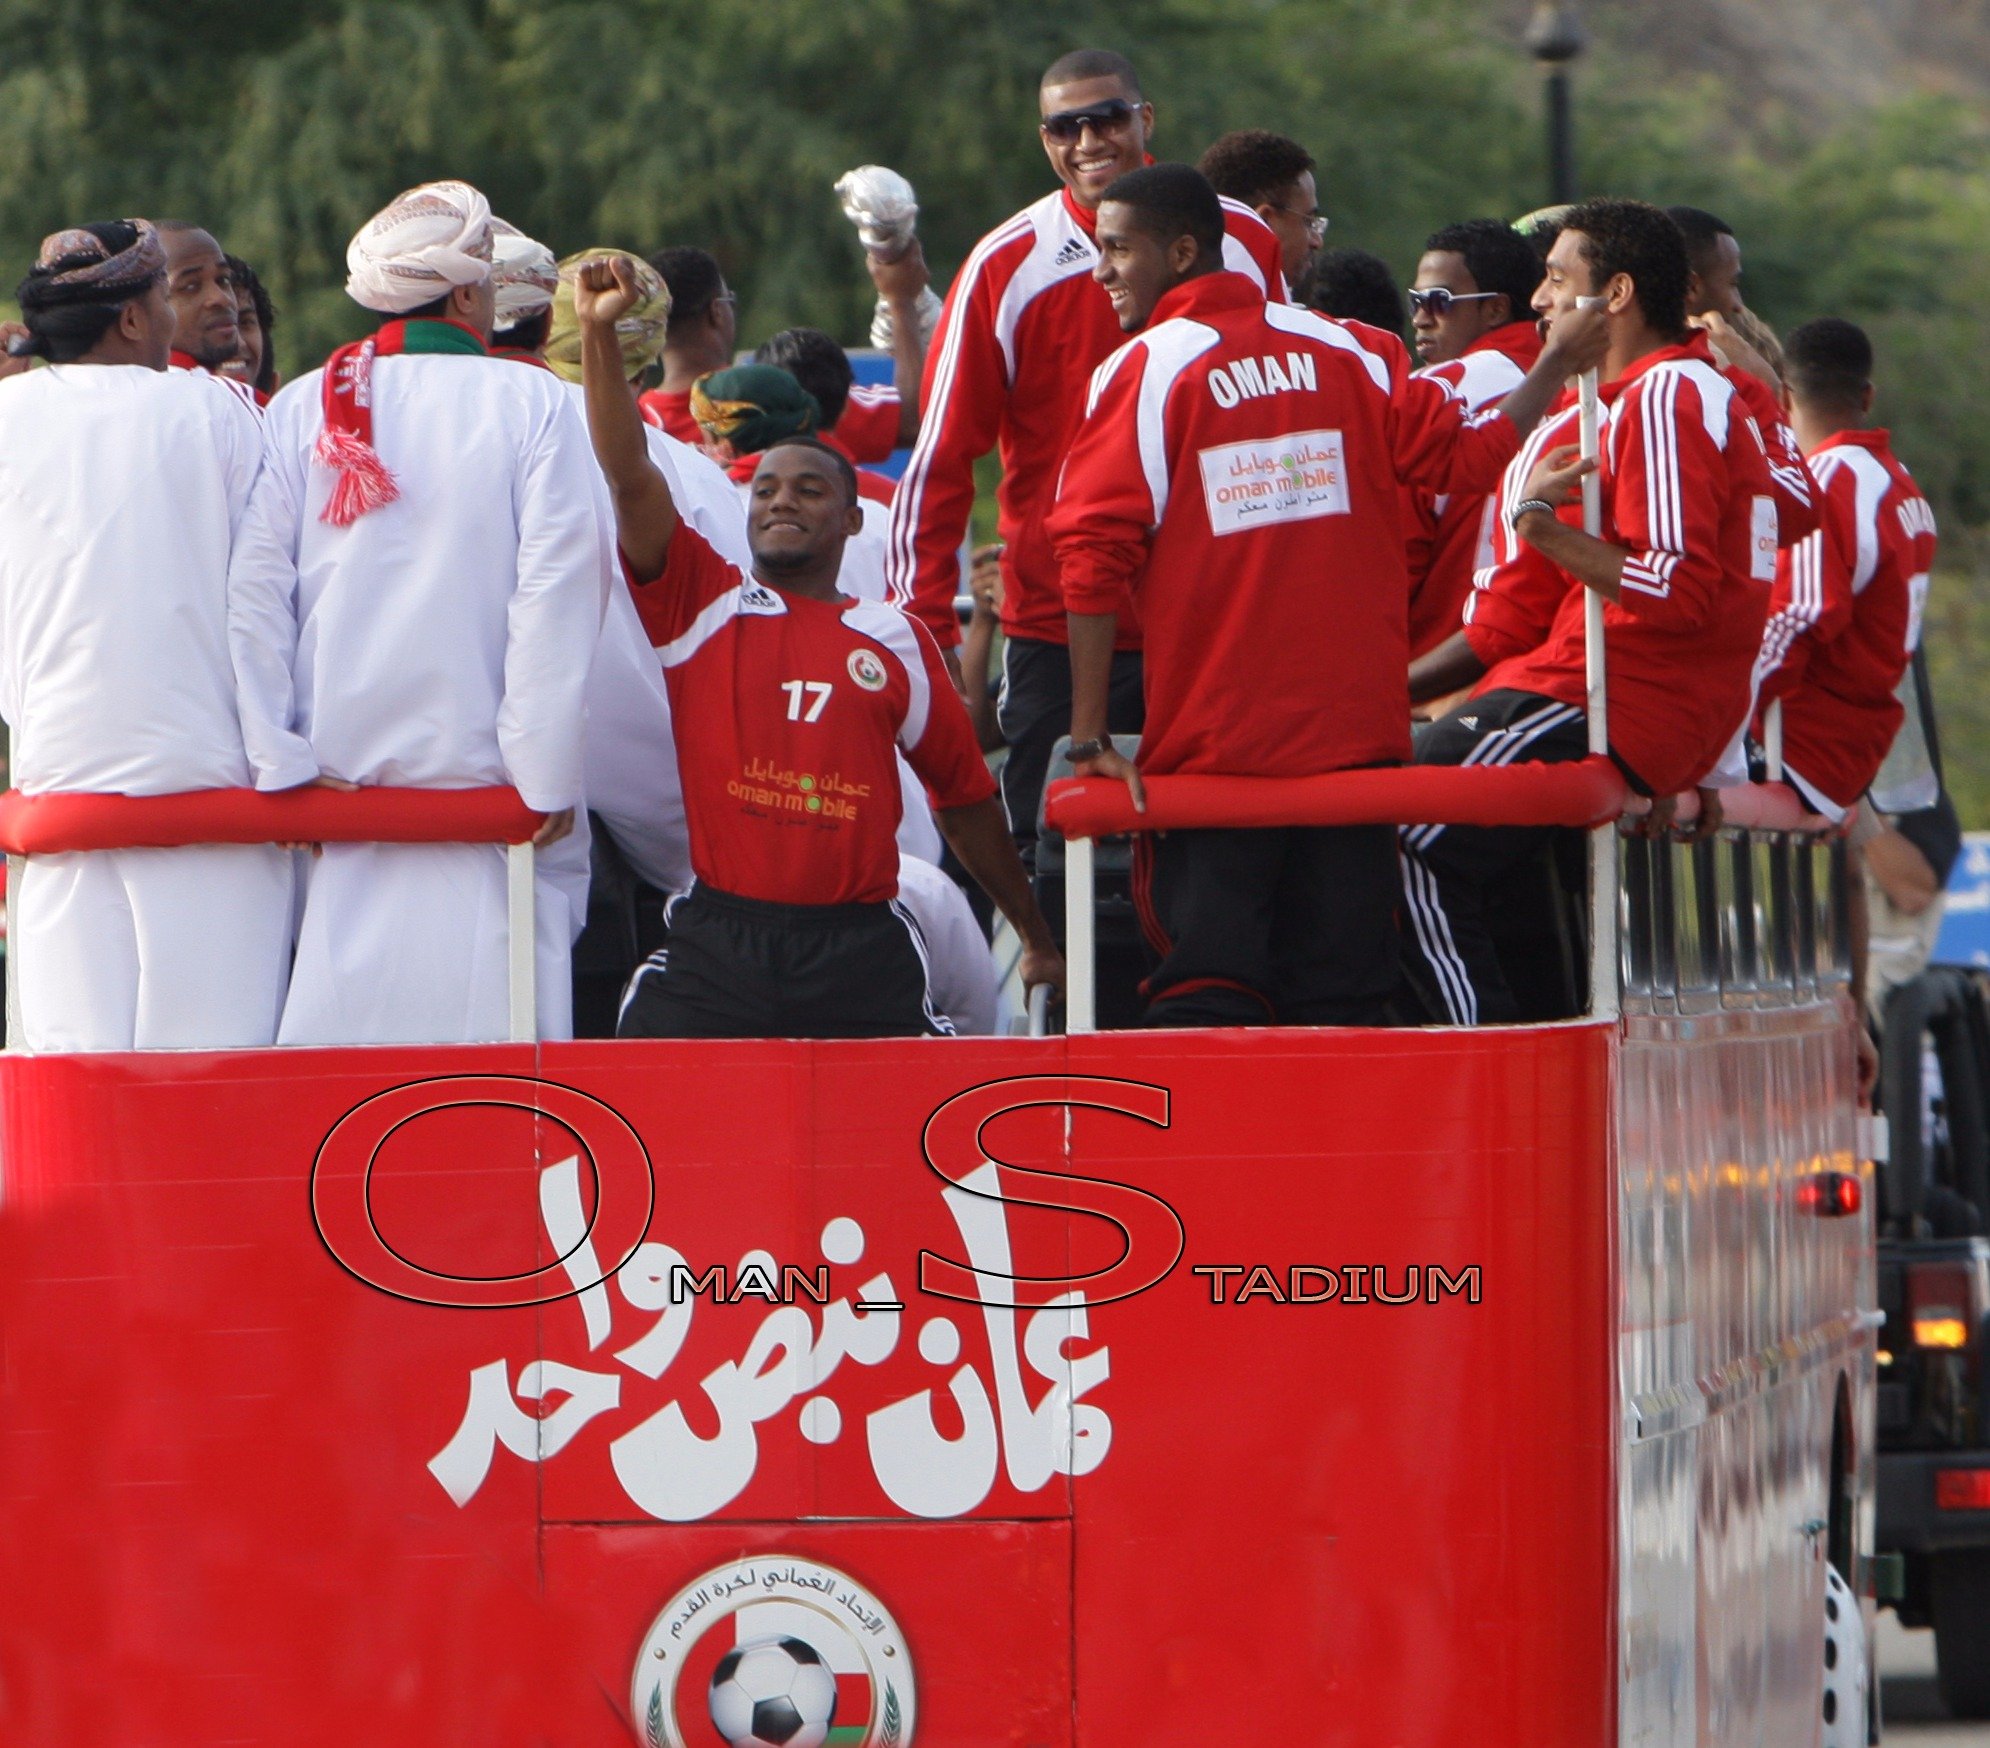 Oman Stadium